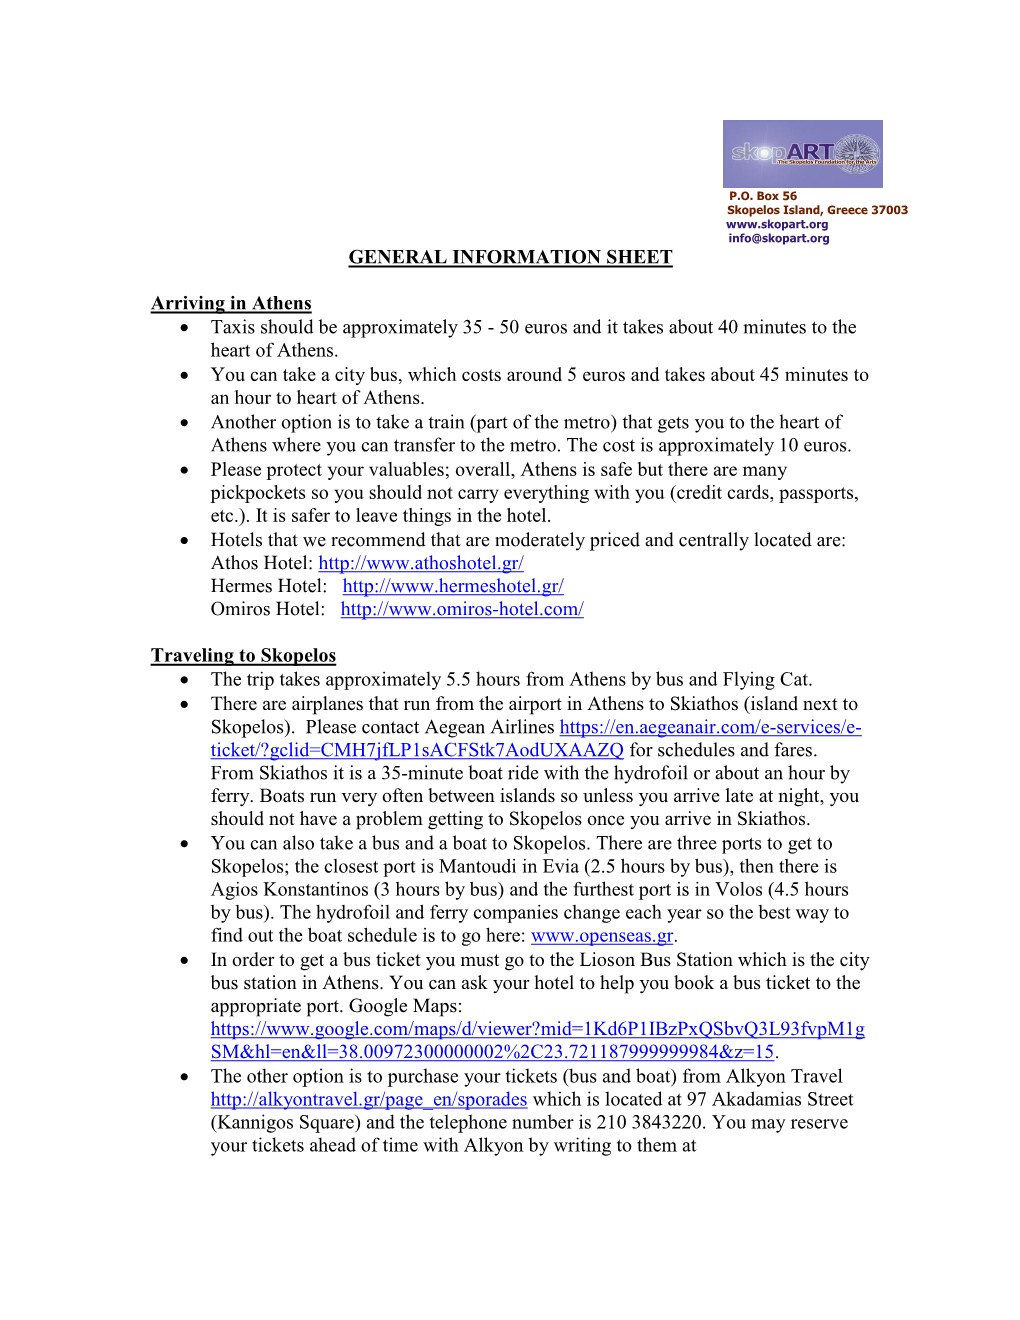 General Information Sheet